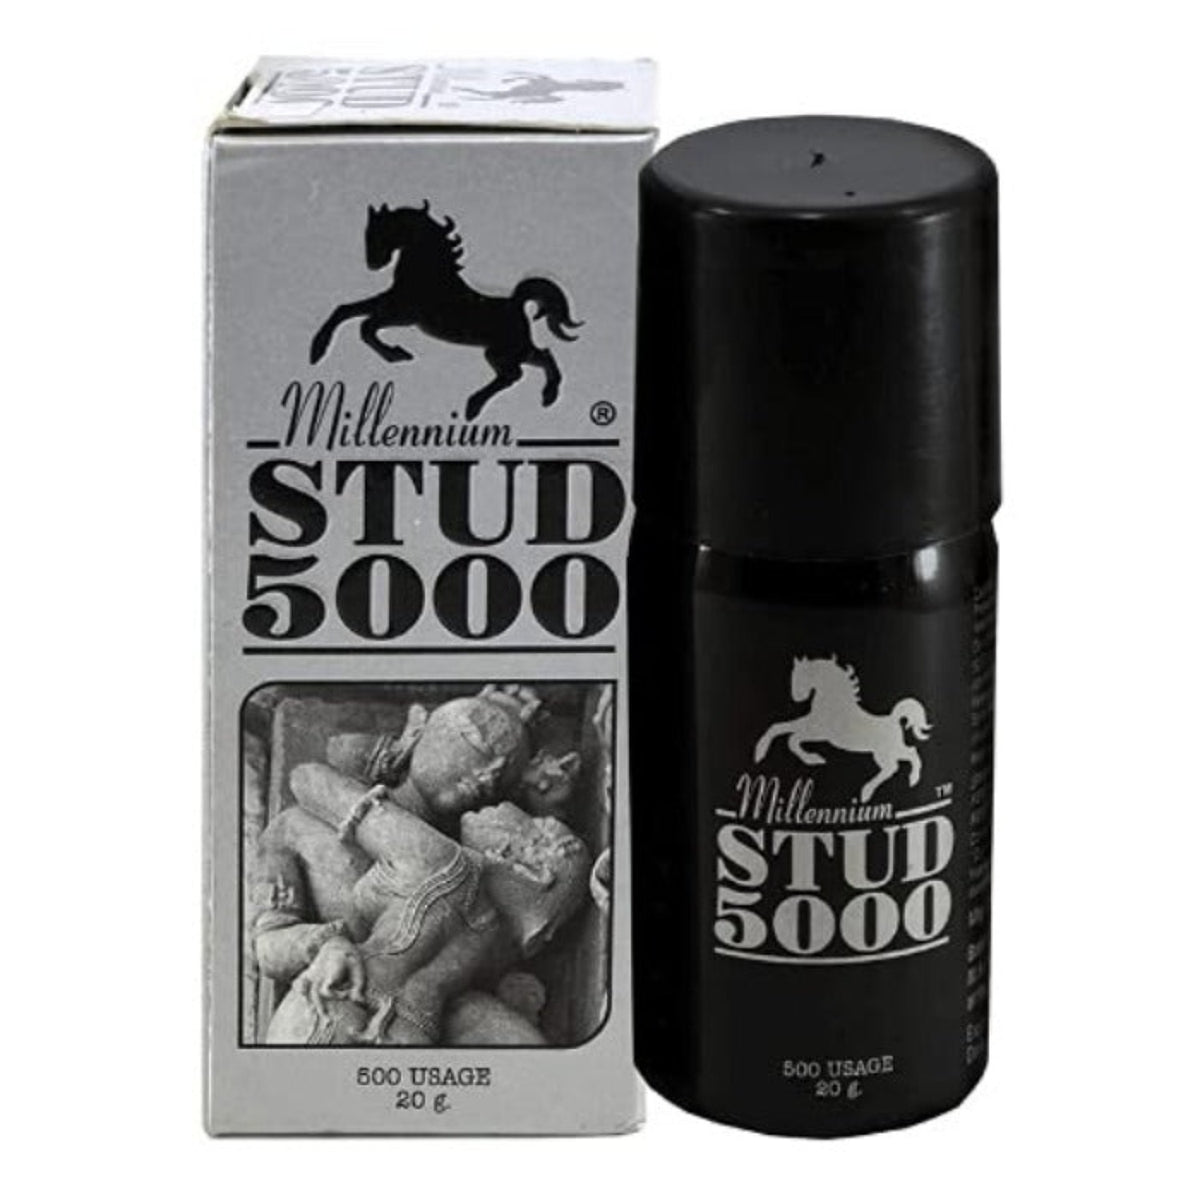 Millennium Stud 5000 Spray Delay Body Spray For Men 20g